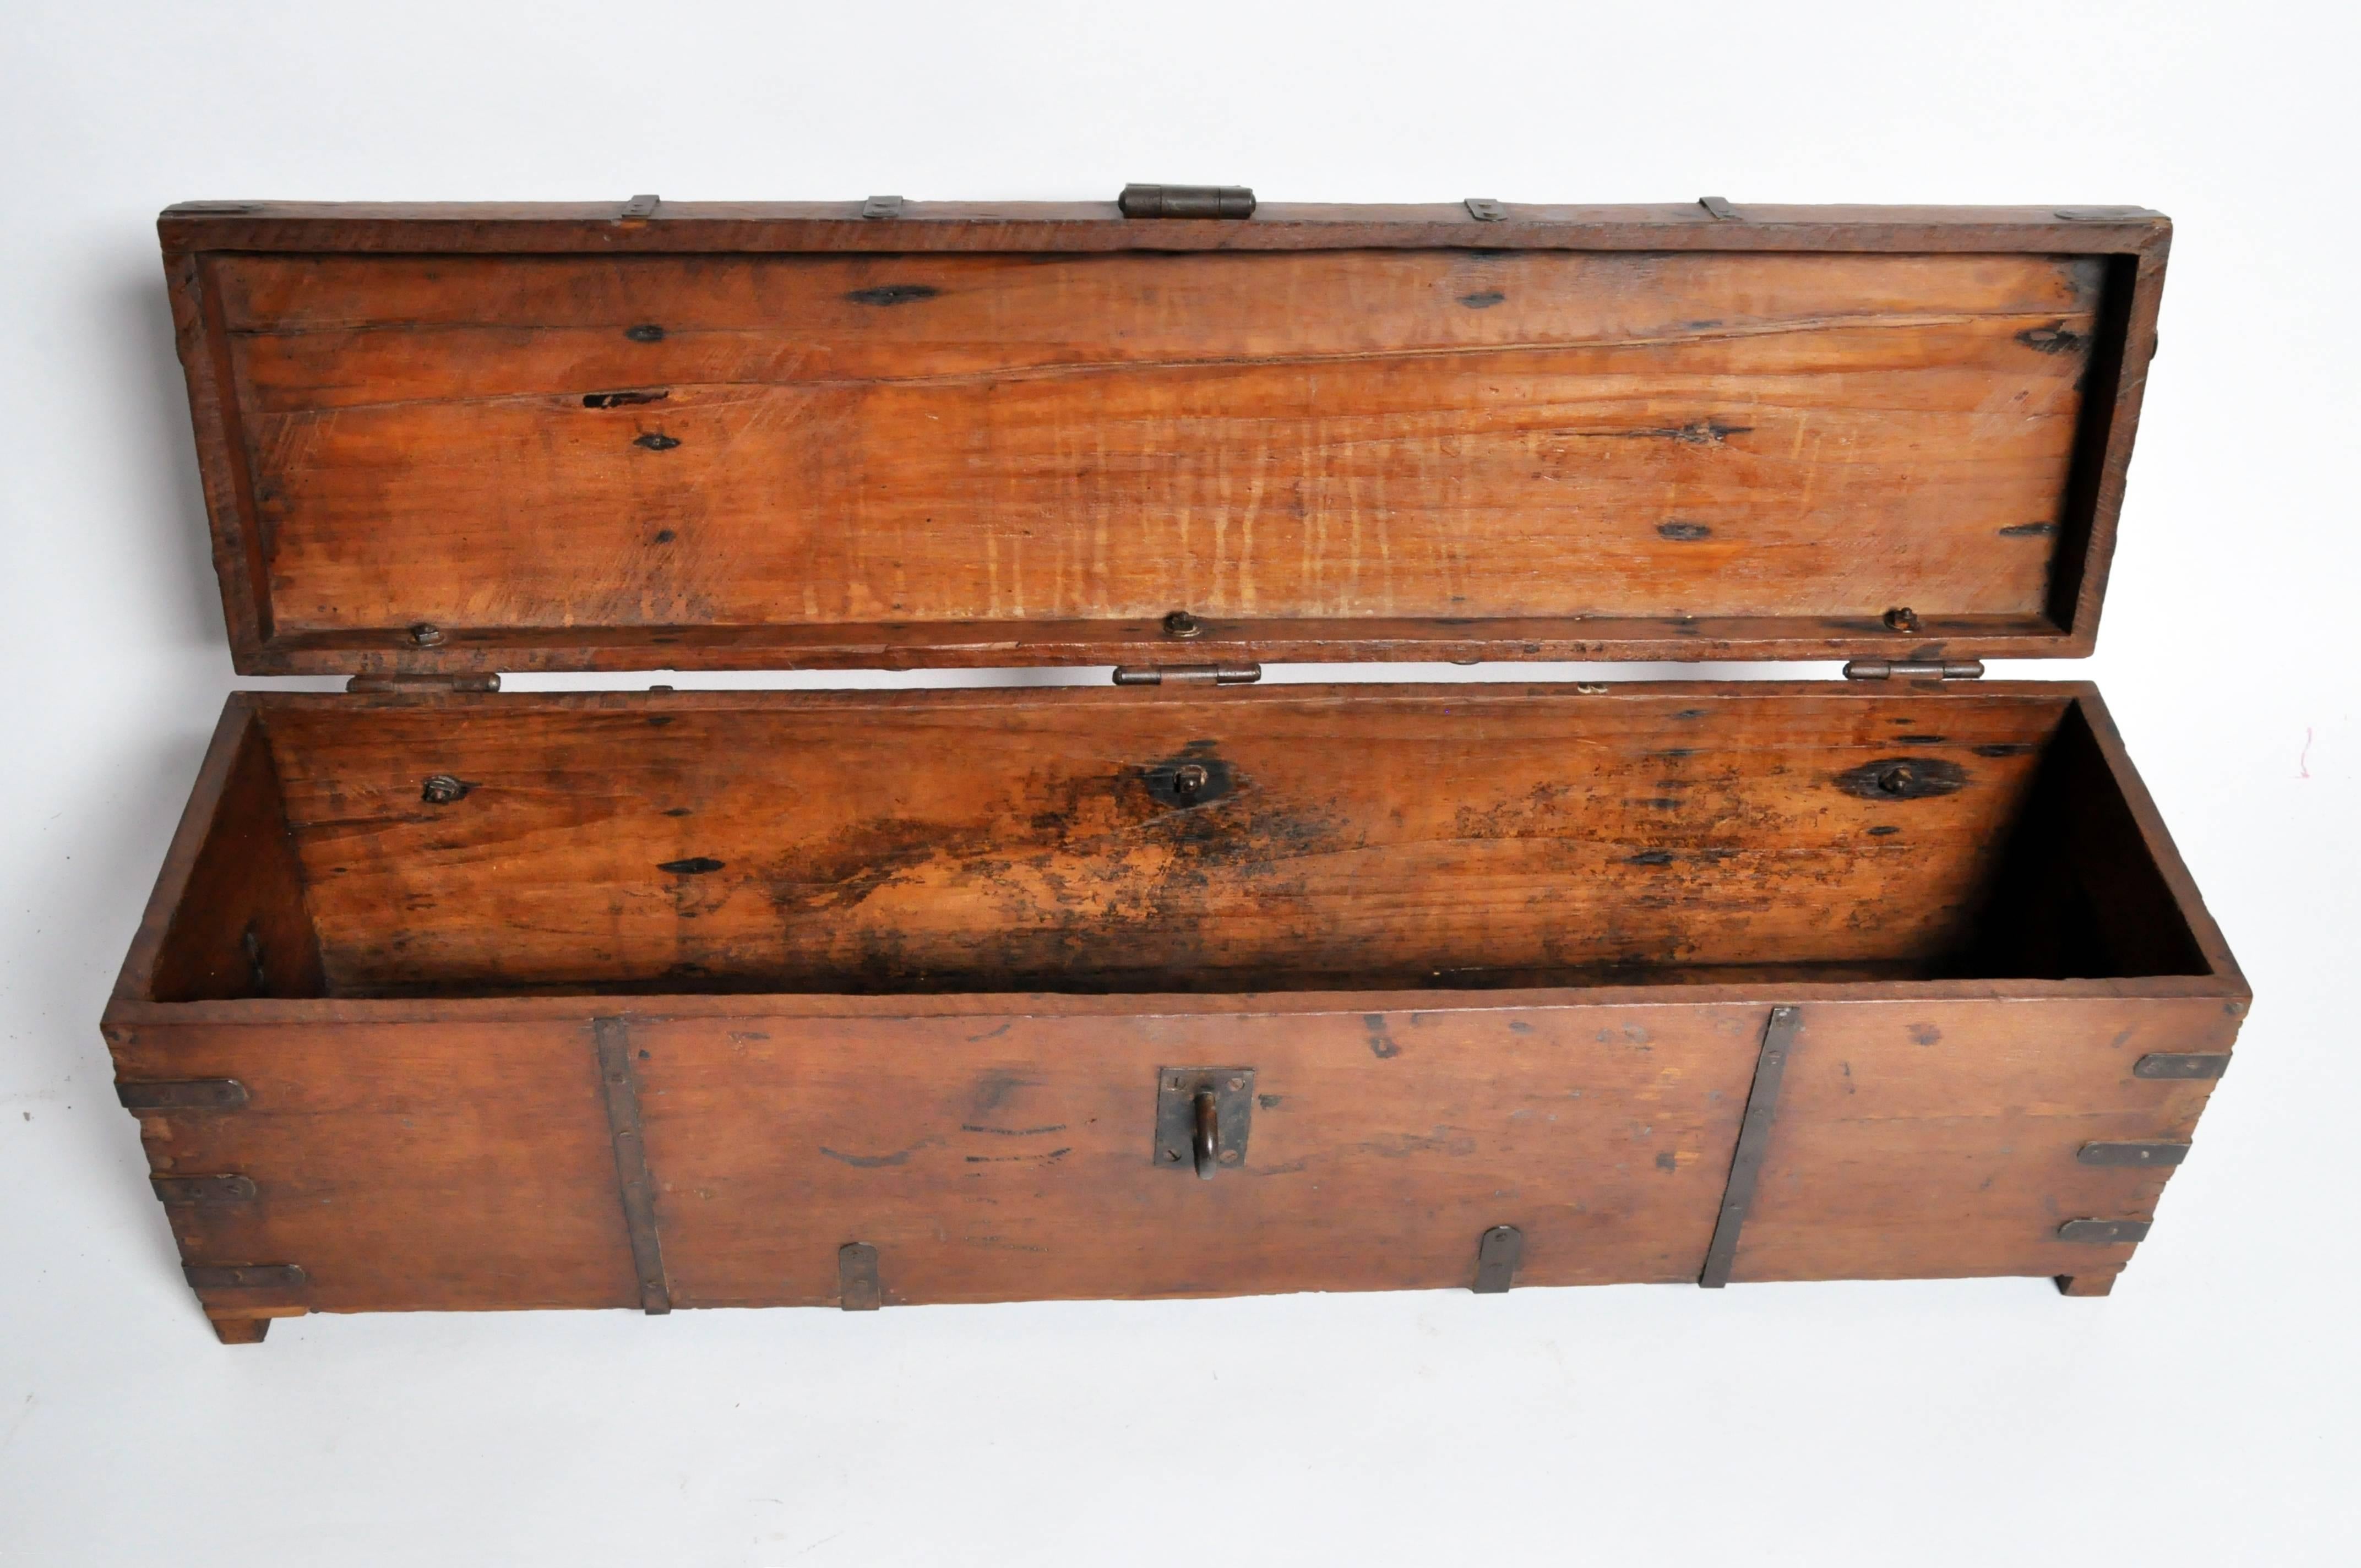 Indian Vintage Rifle Box with Metal Trim